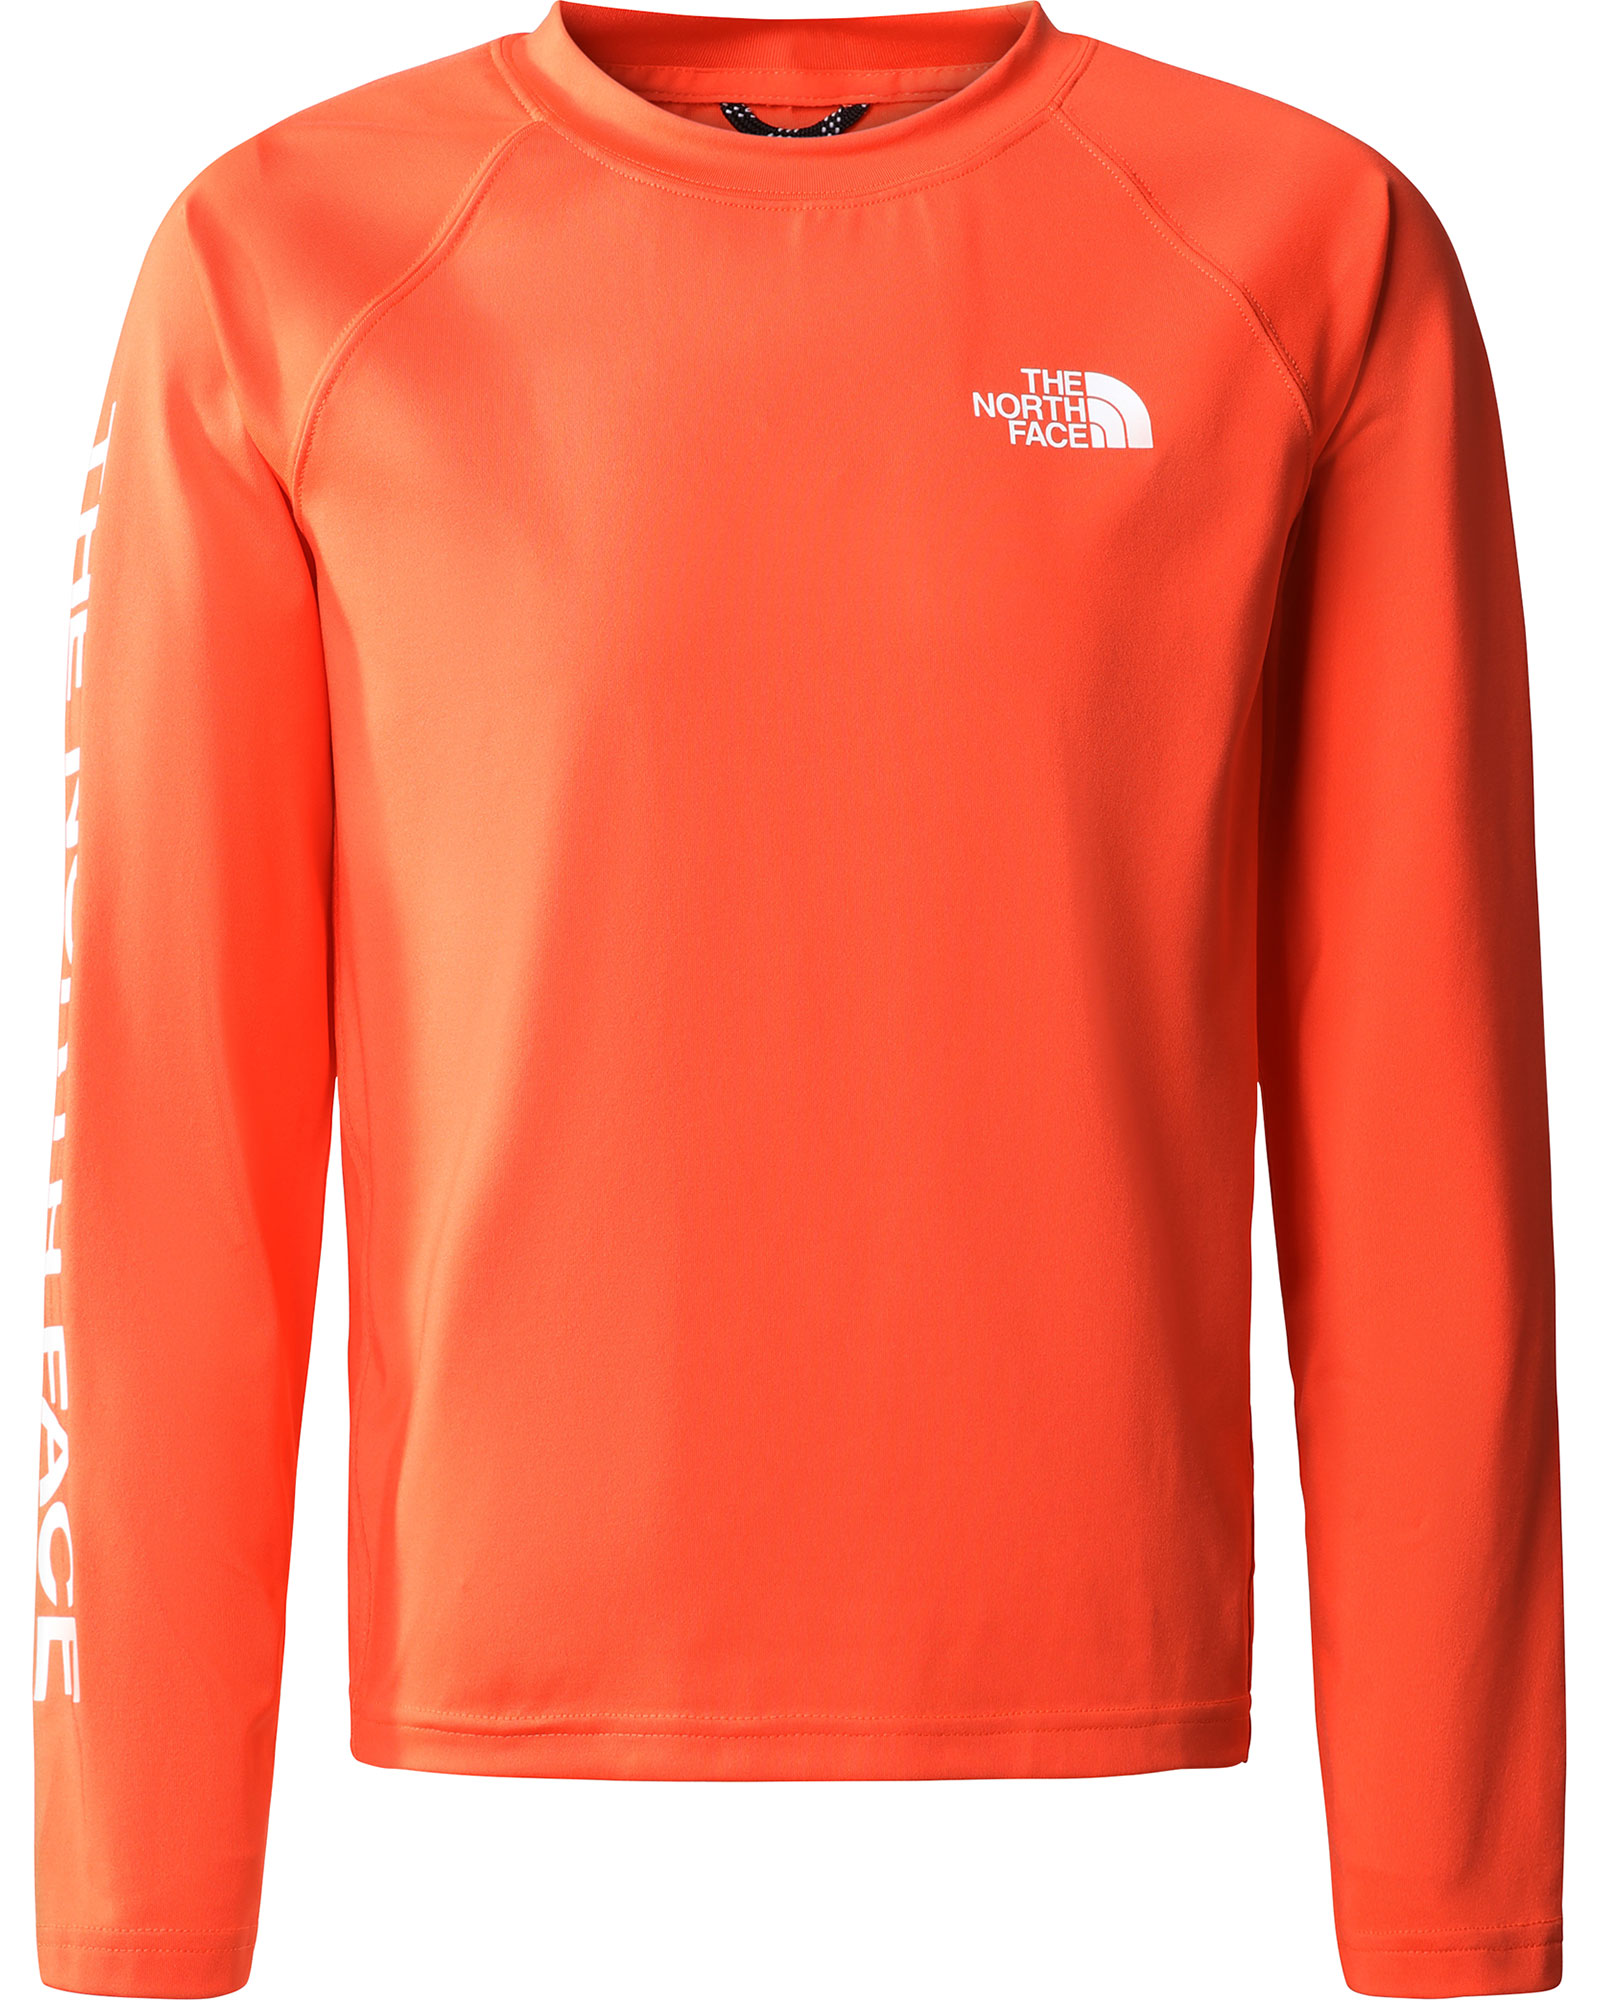 The North Face Boy’s Amphibious Long Sleeved Sun T Shirt - Retro Orange L